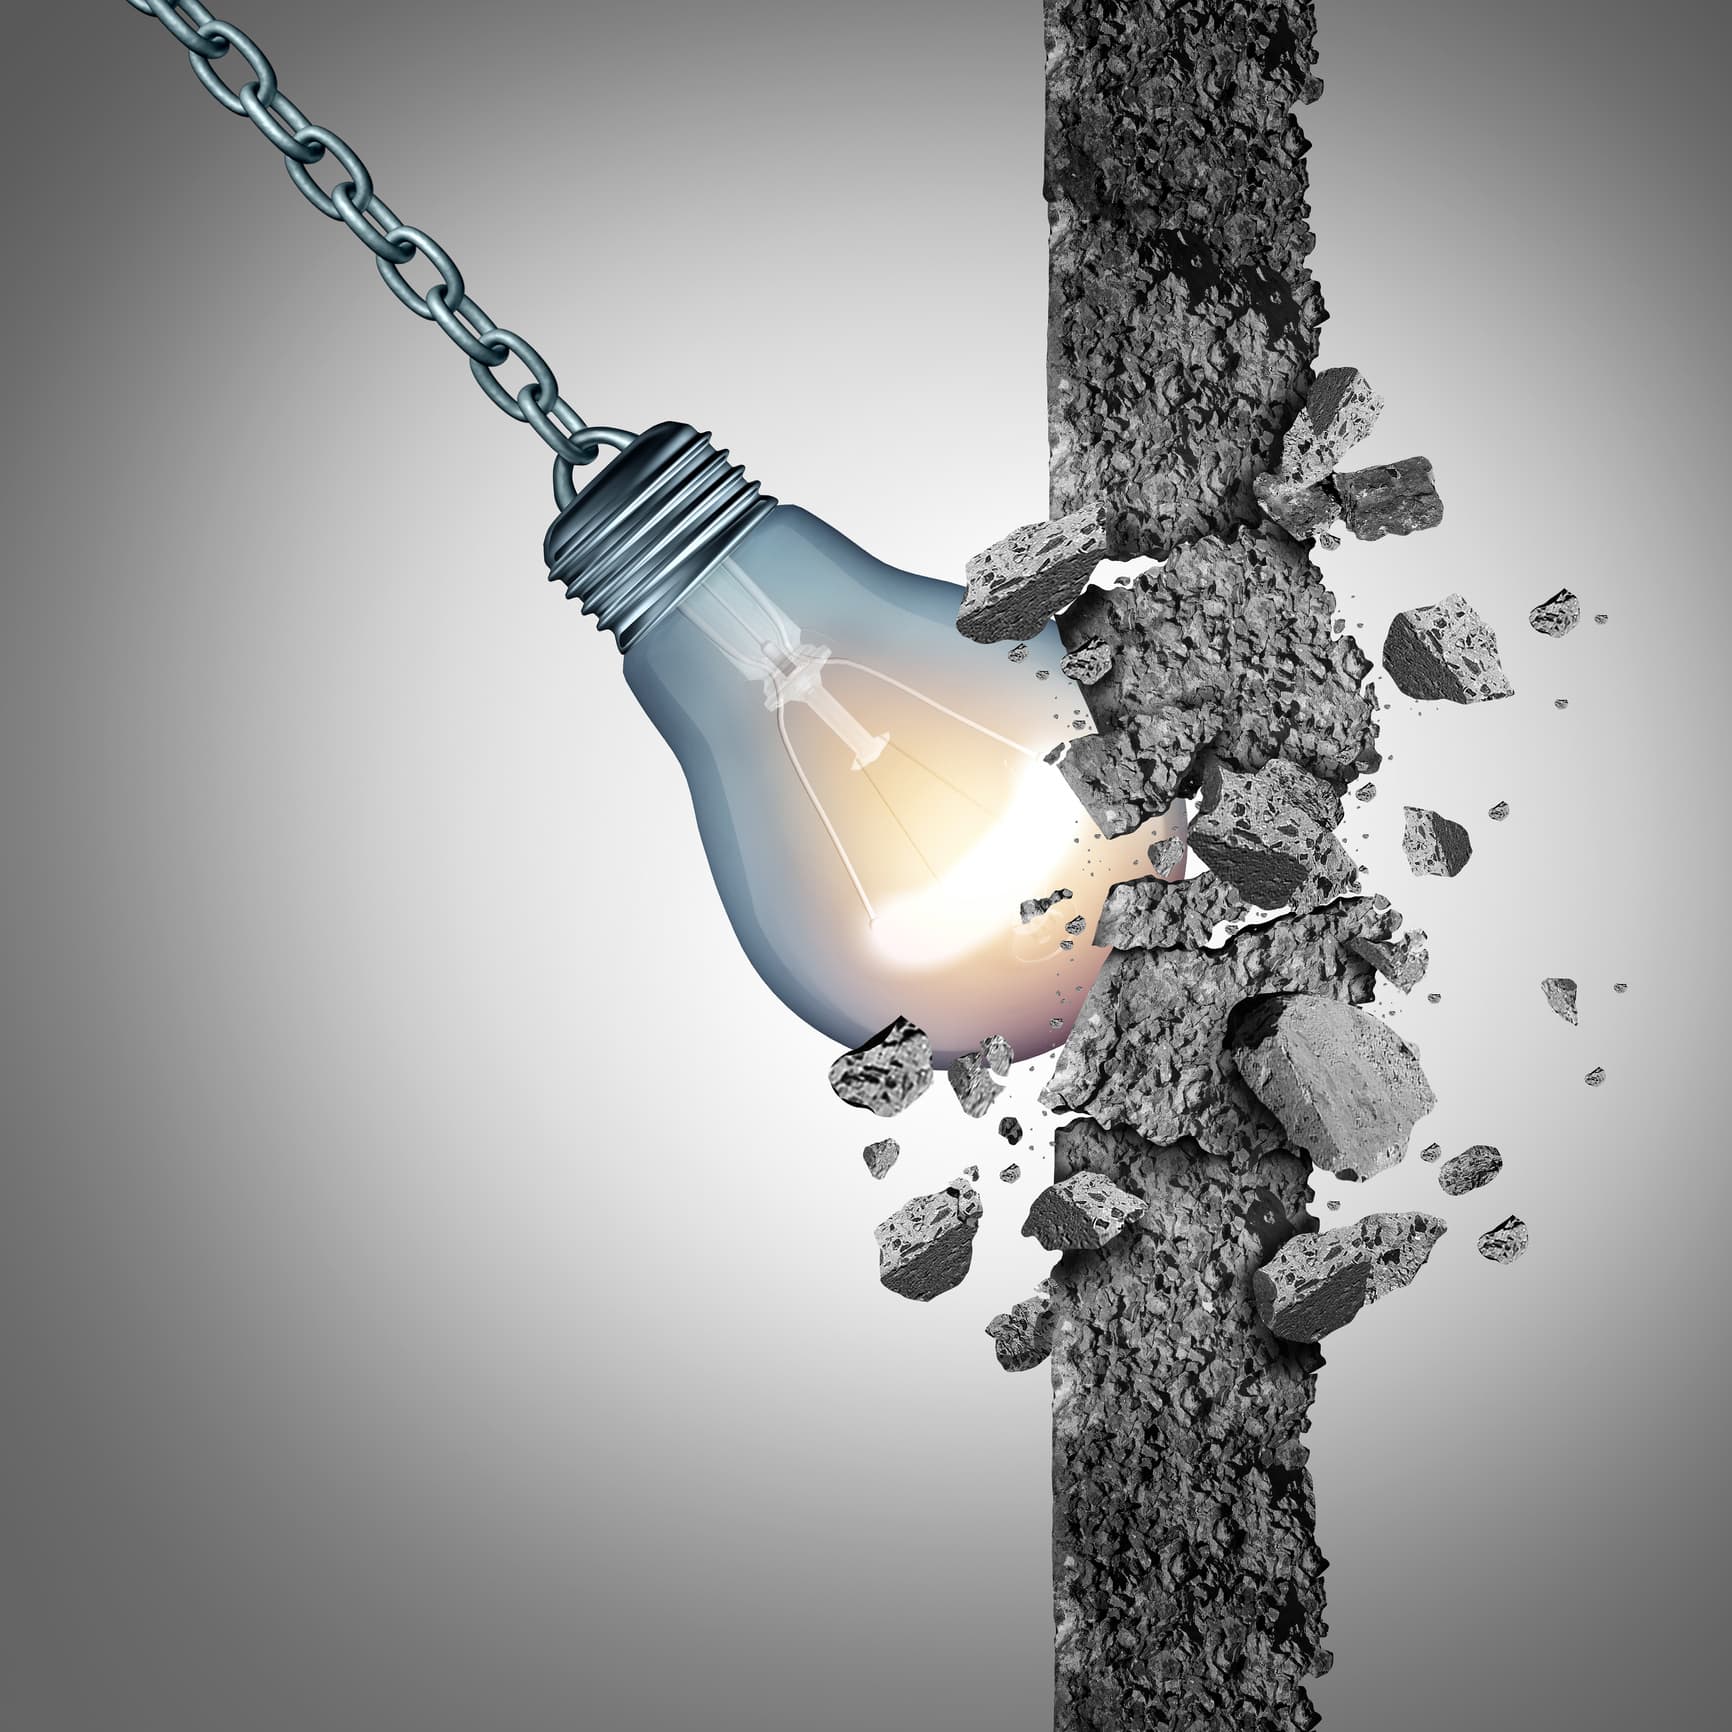 lightbulb smashing rocks, creative thinking, limiting factor